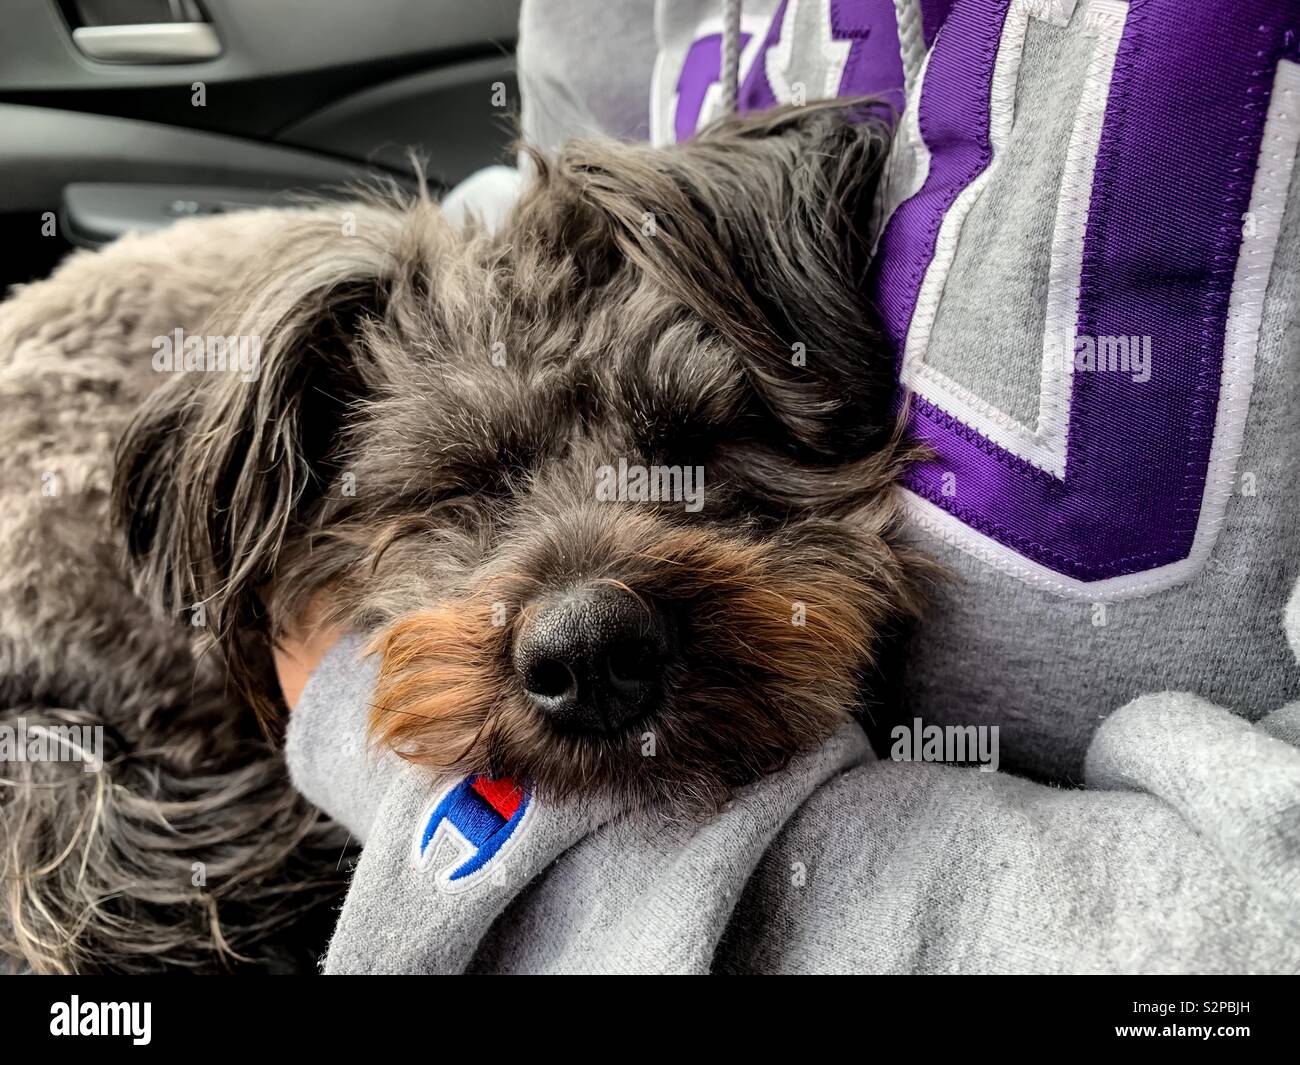 Little dog asleep on owner’s lap Stock Photo